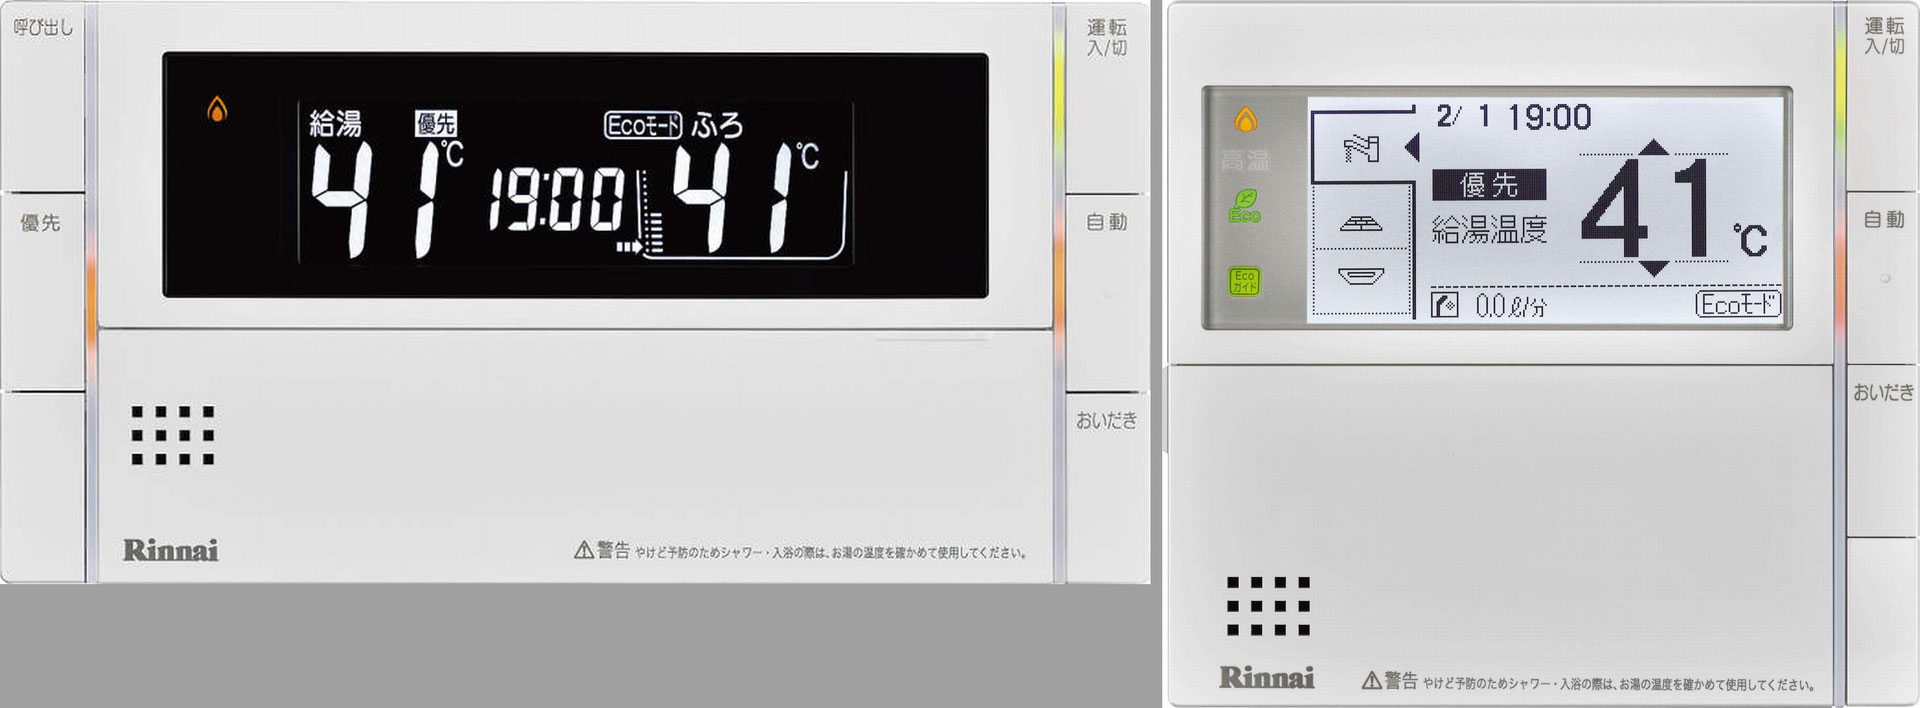 HT(RUFH)エコパッケージ特価 - 渋谷区 TES ガス器具 給湯器 コンロ